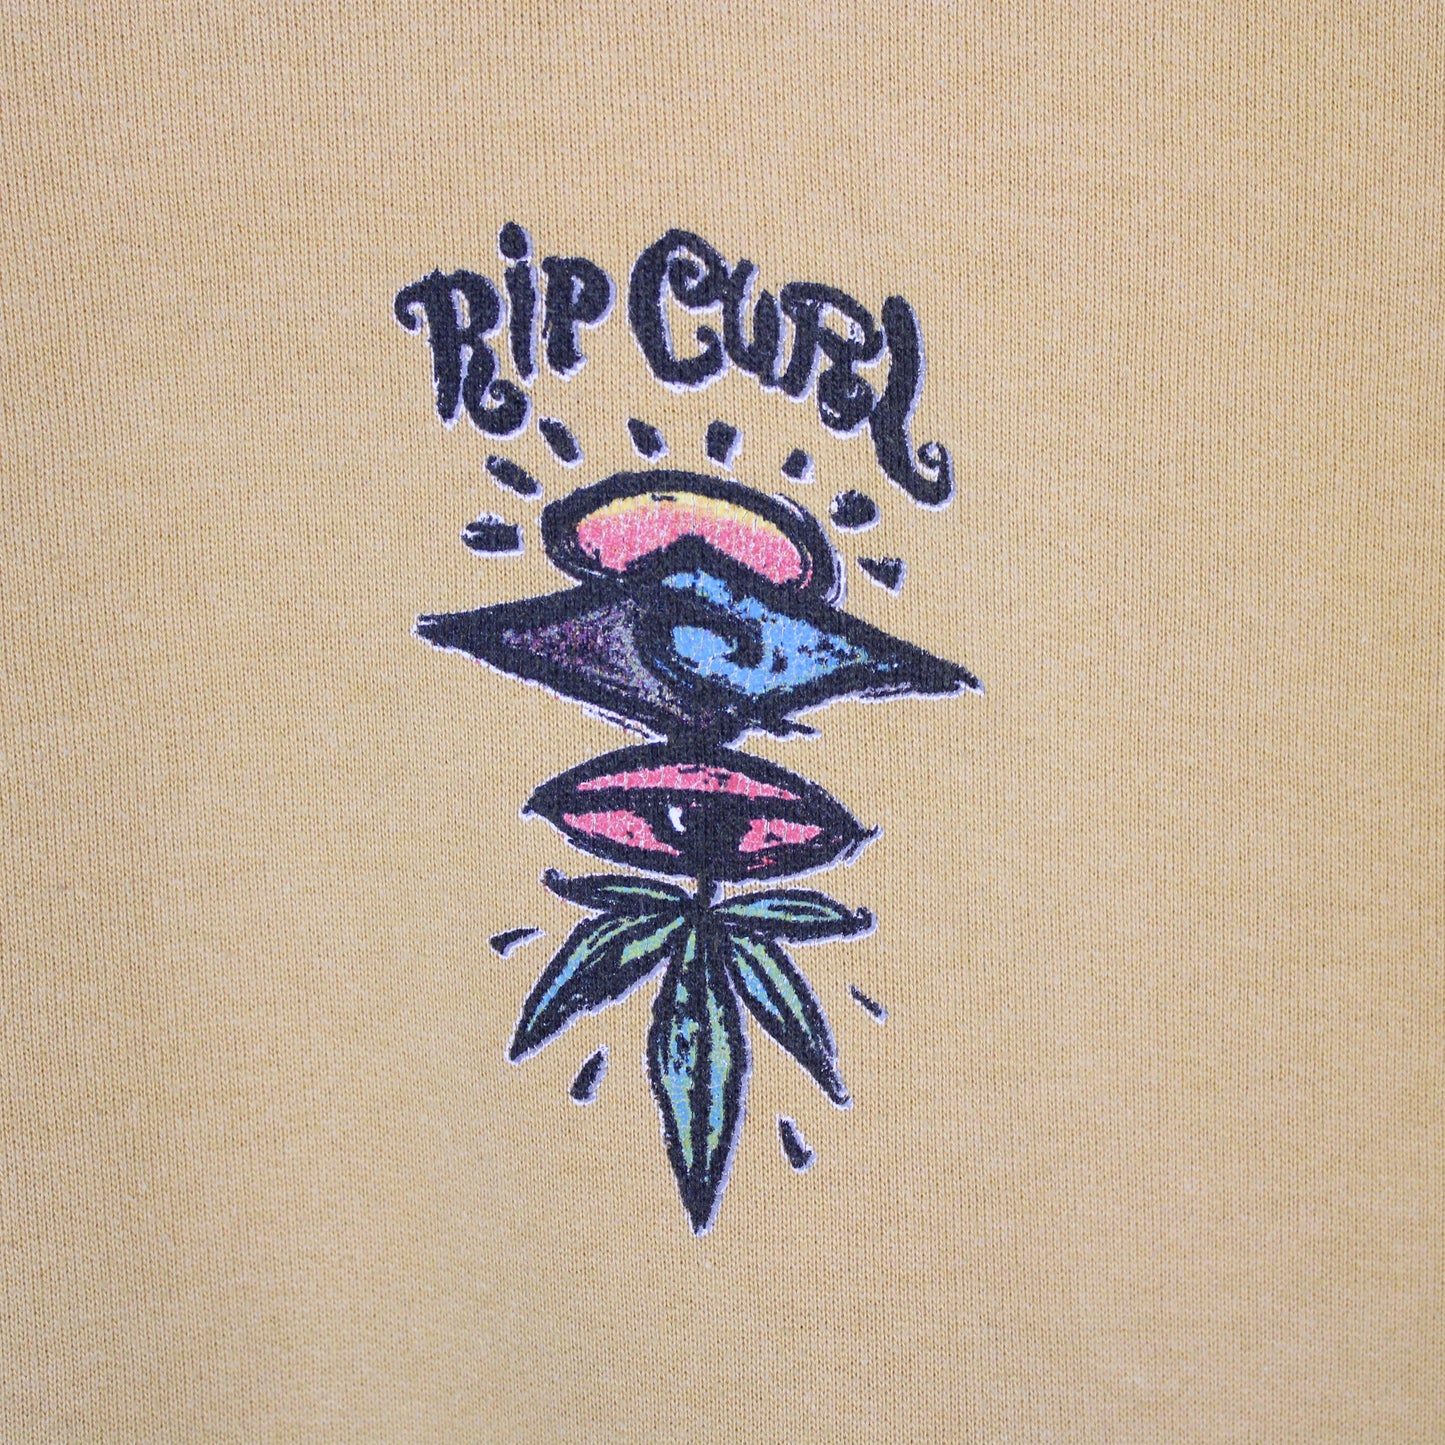 Vintage 90s Rip Curl Sweatshirt - L